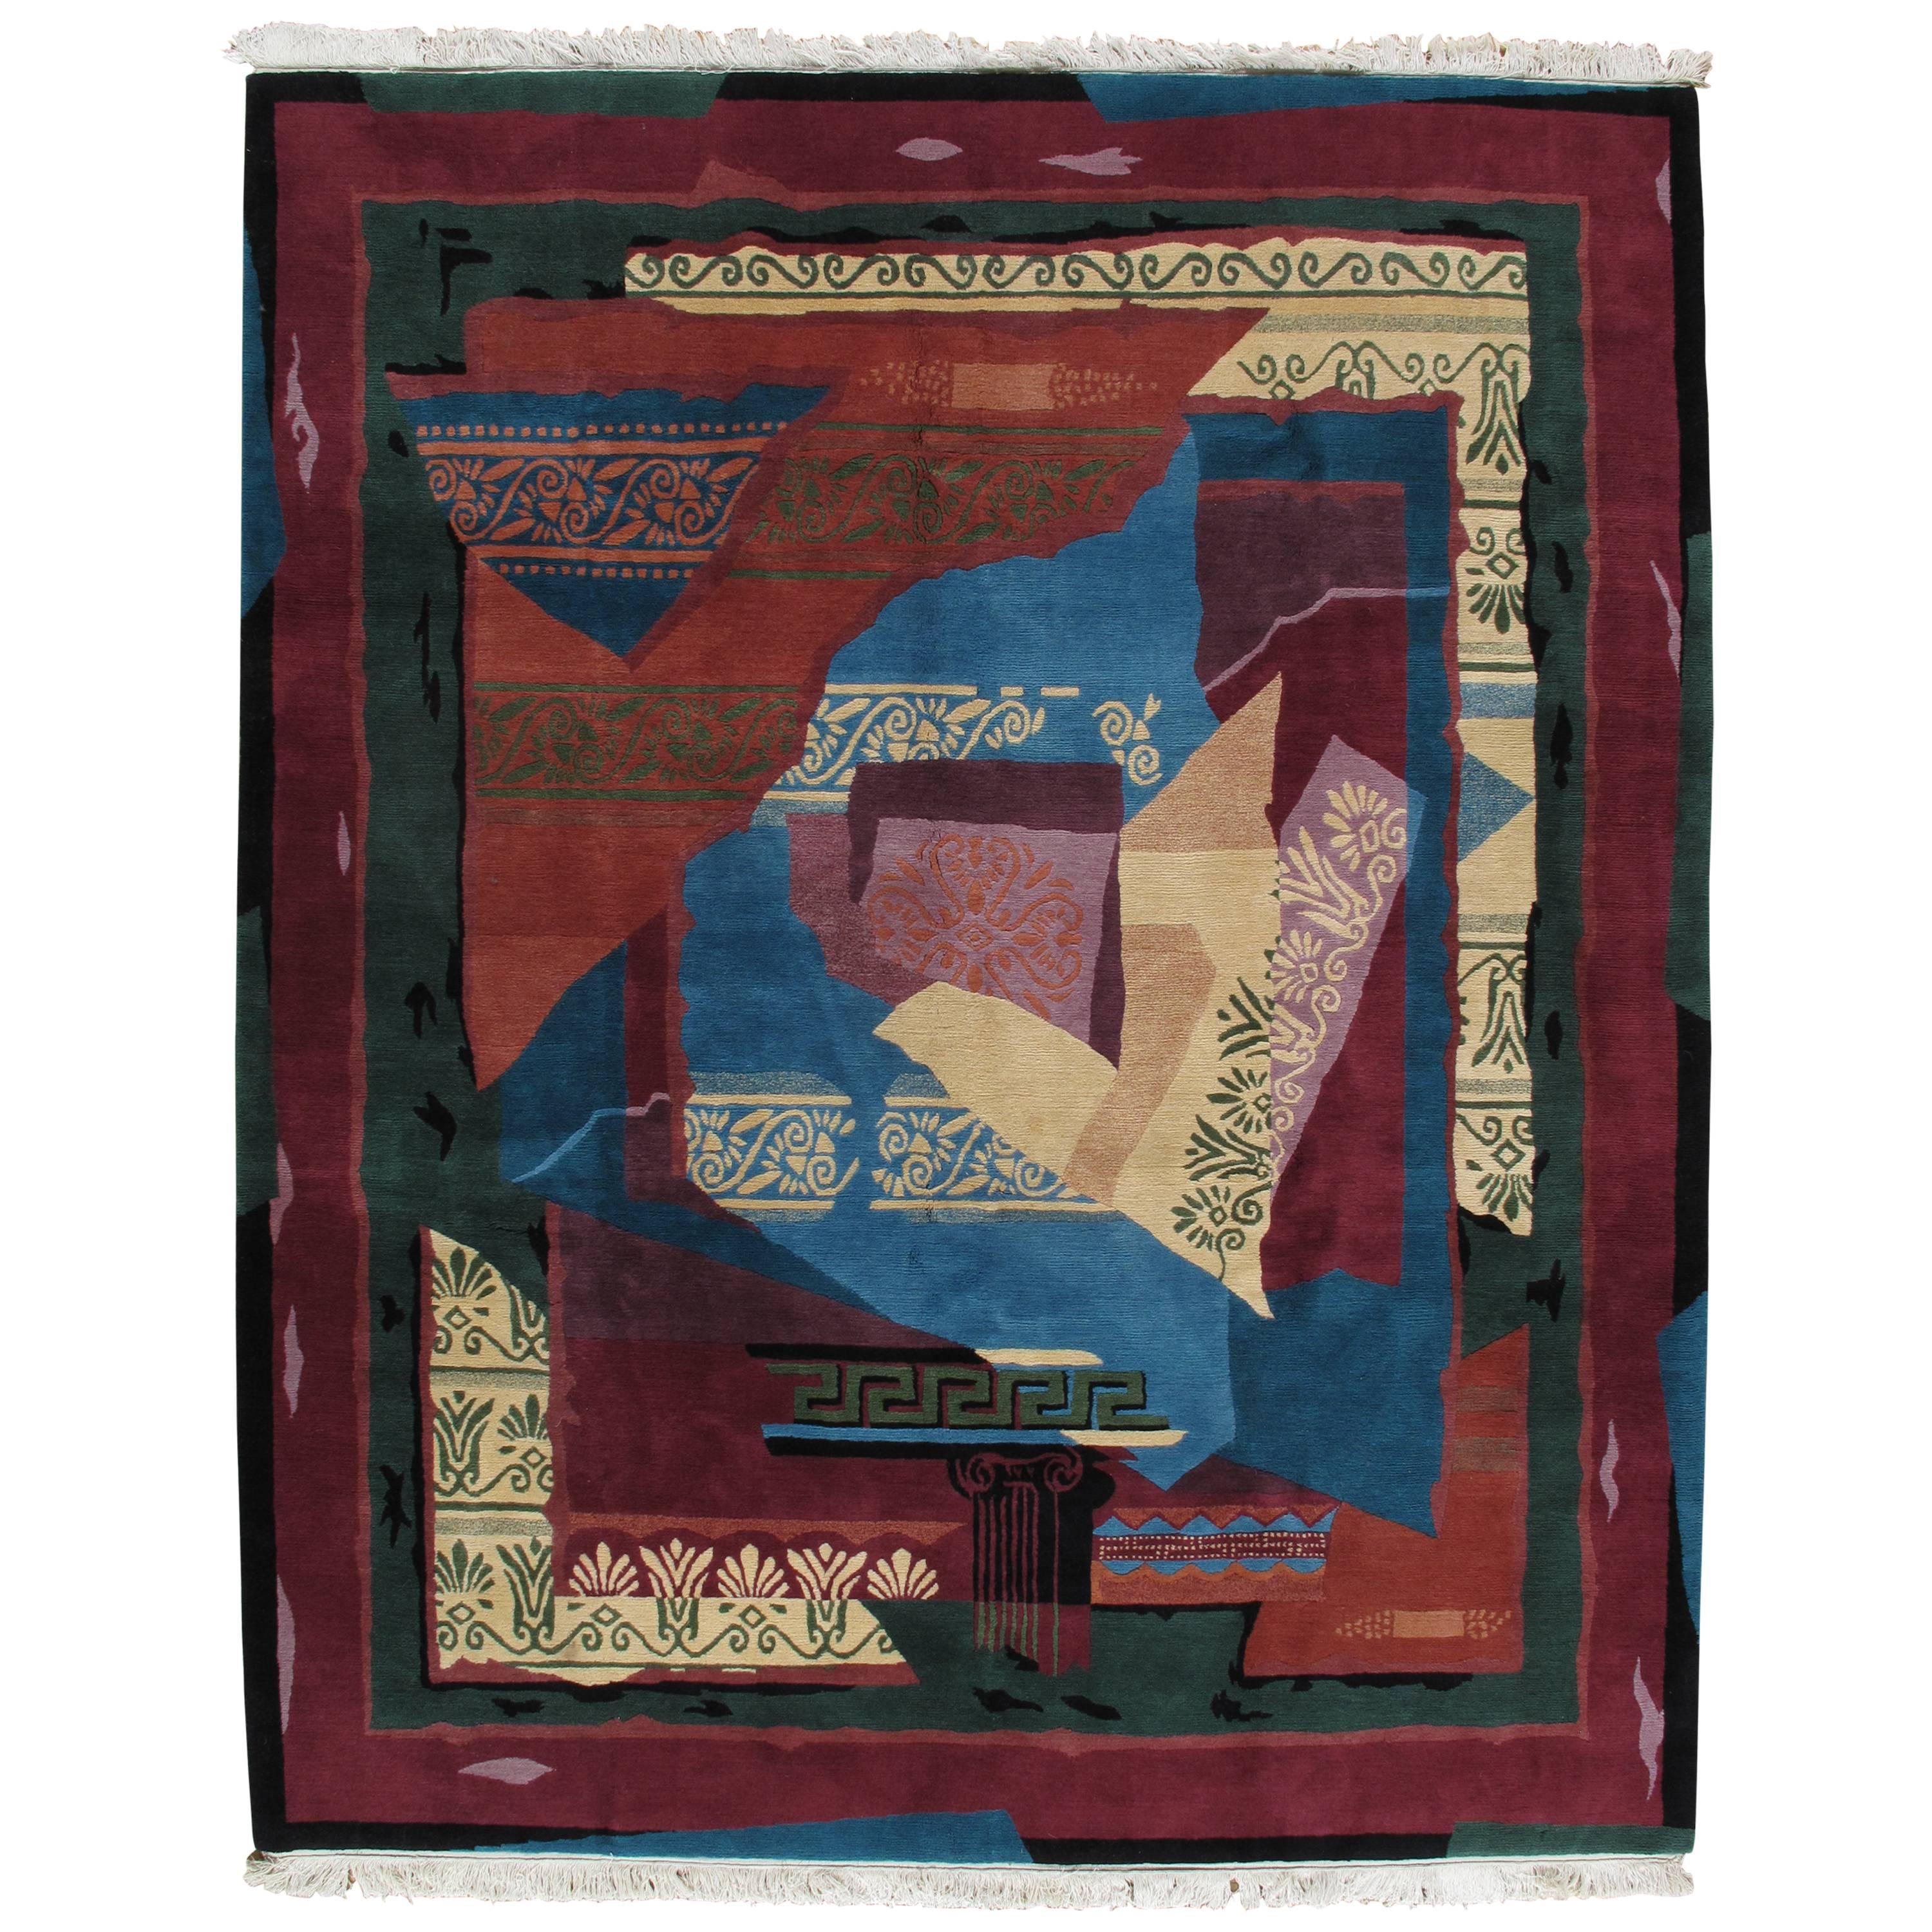 Vintage Tibetan Carpet, Handmade Wool Carpet, Red, Blue, Green, Ivory, Magenta